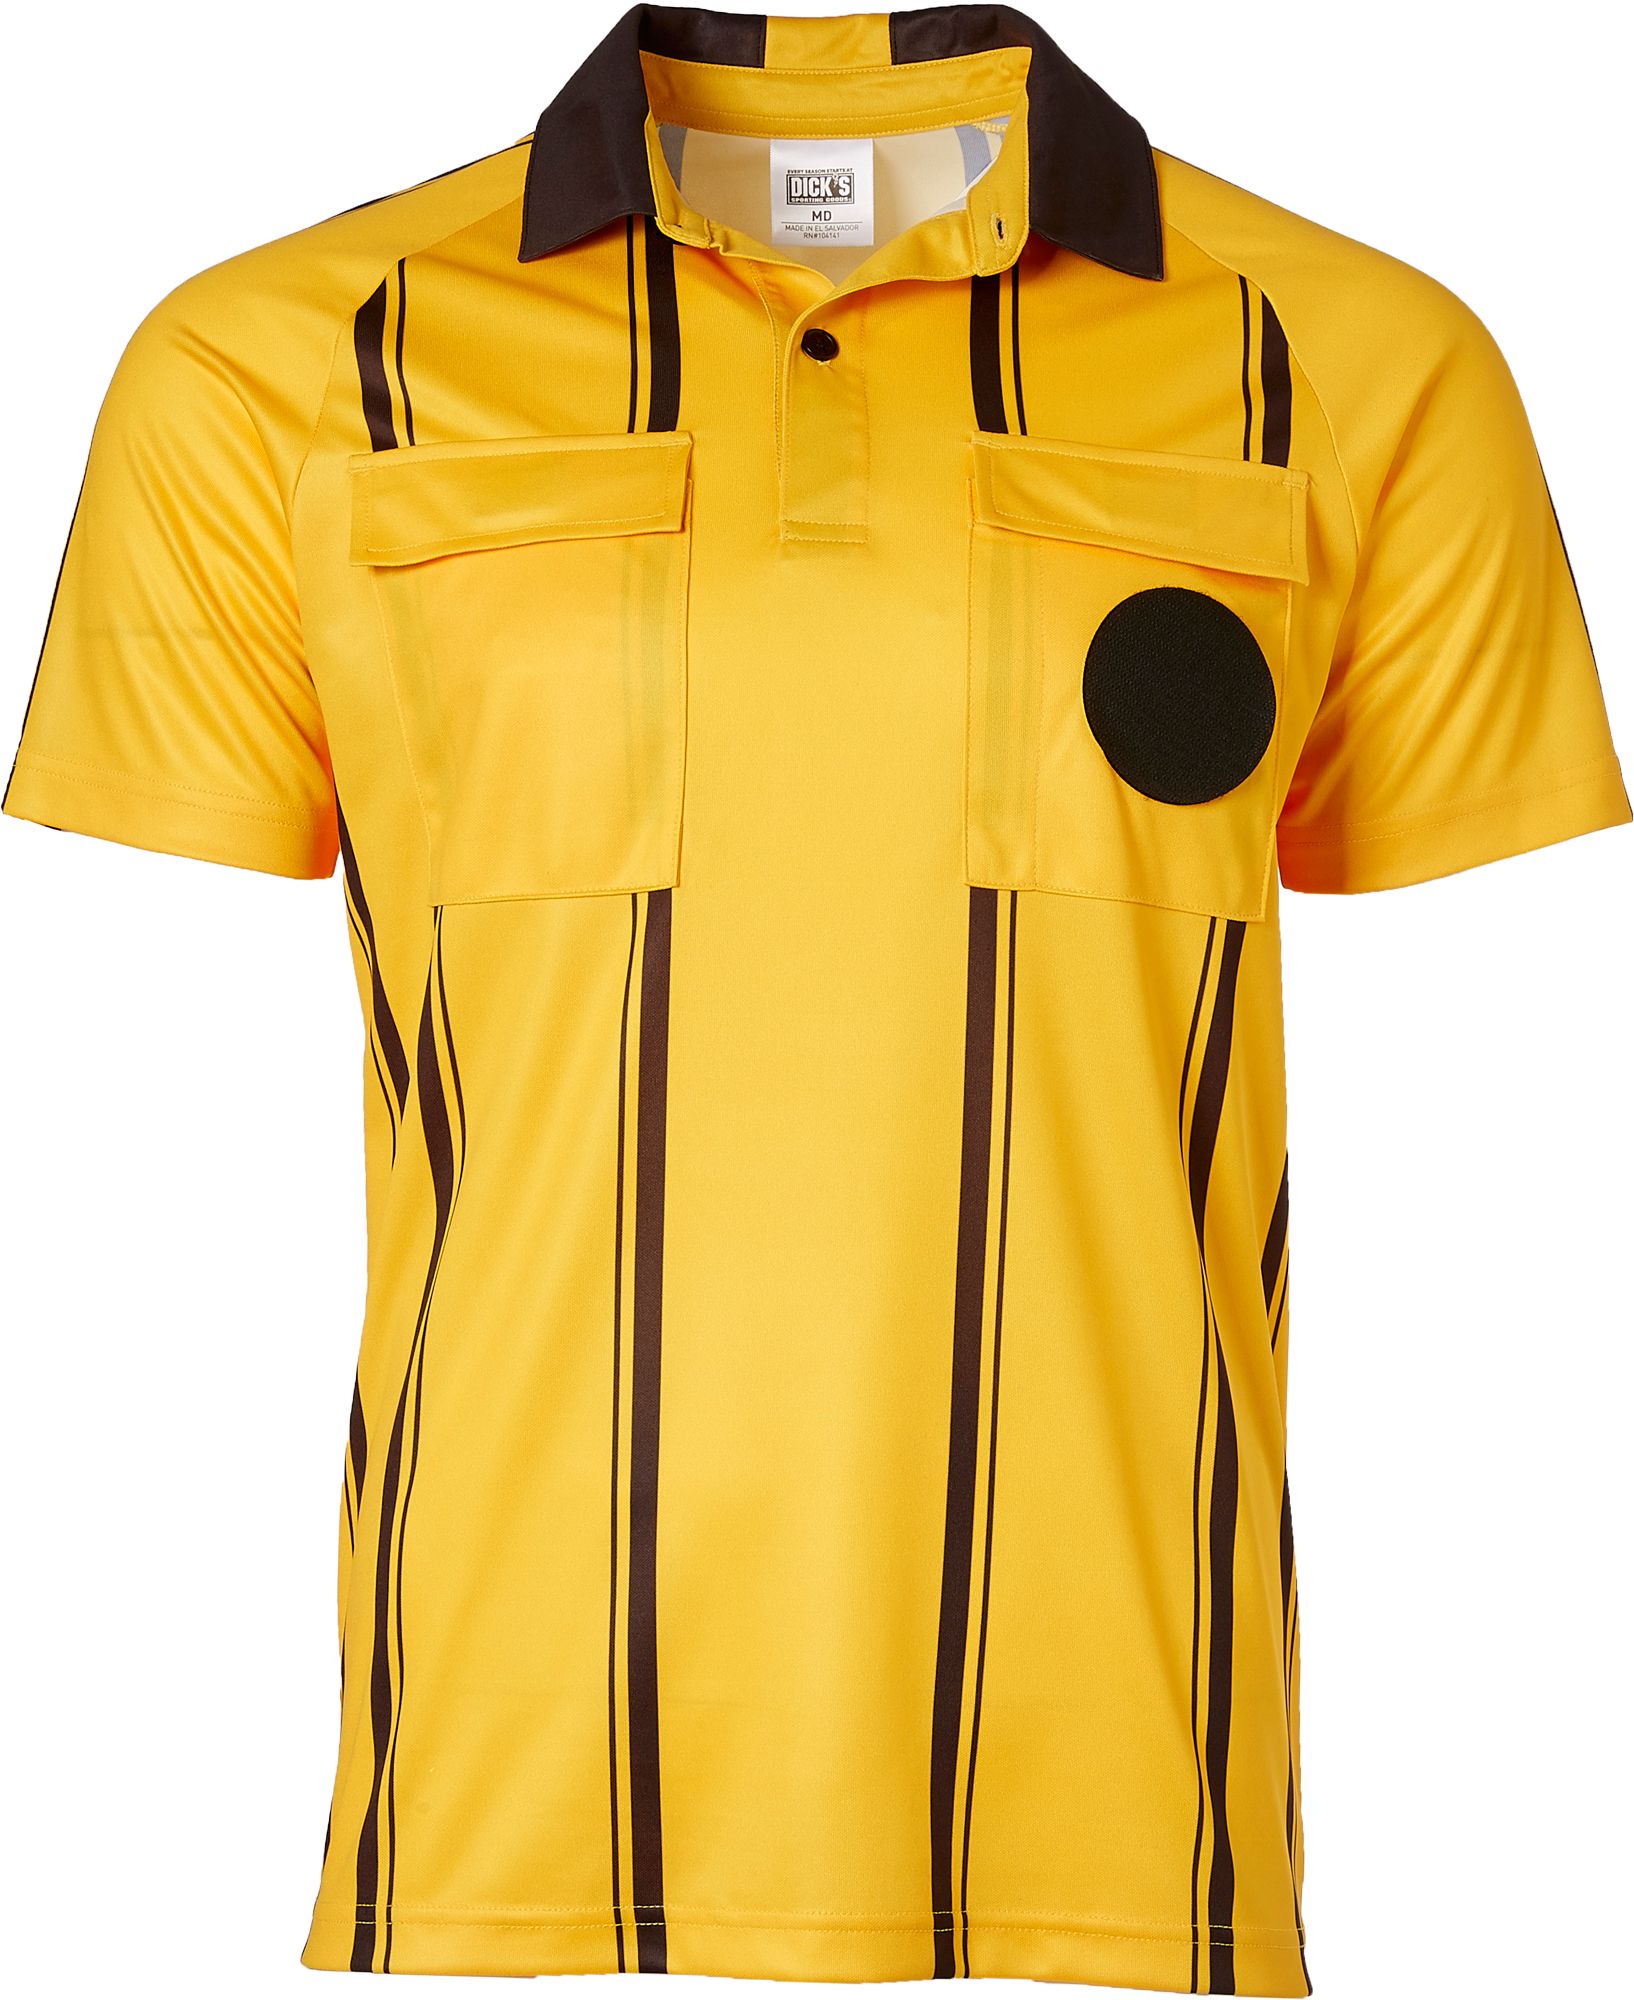 Dicks sporting goods new referee jersey